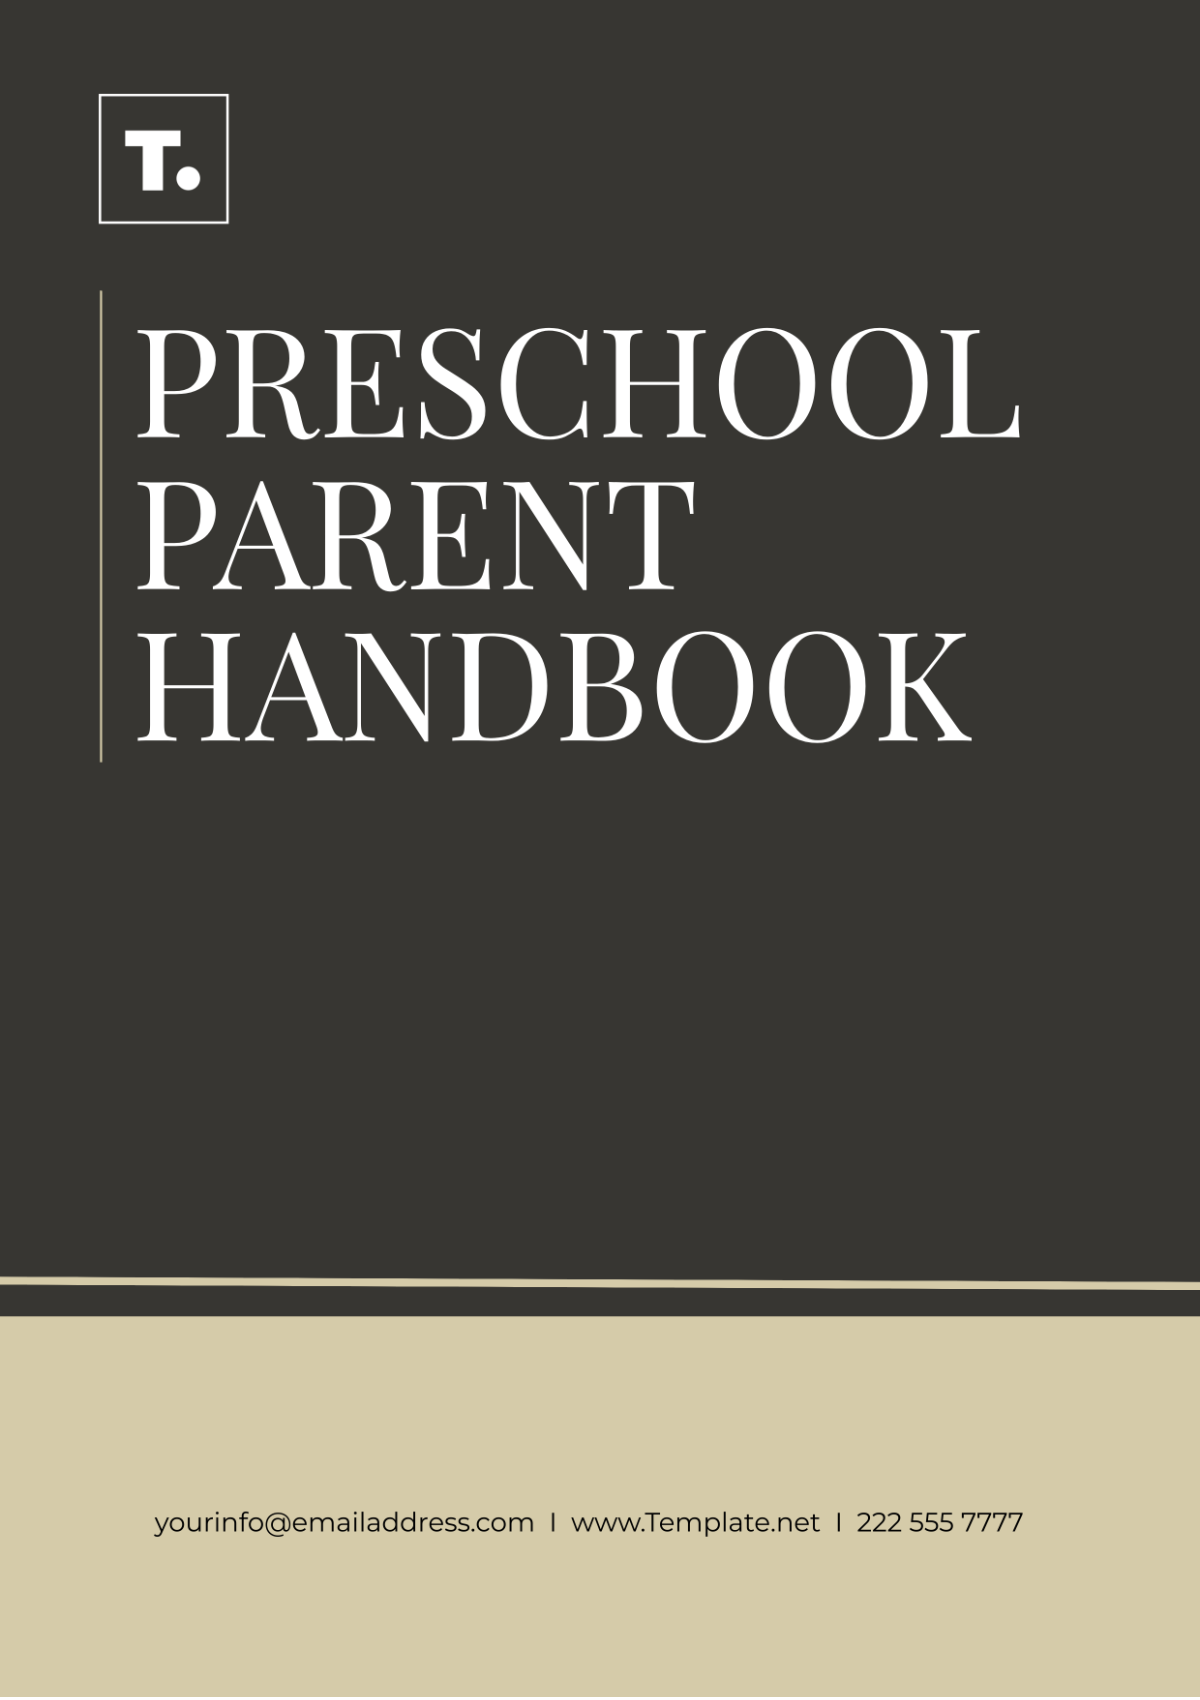 Free Preschool Parent Handbook Template